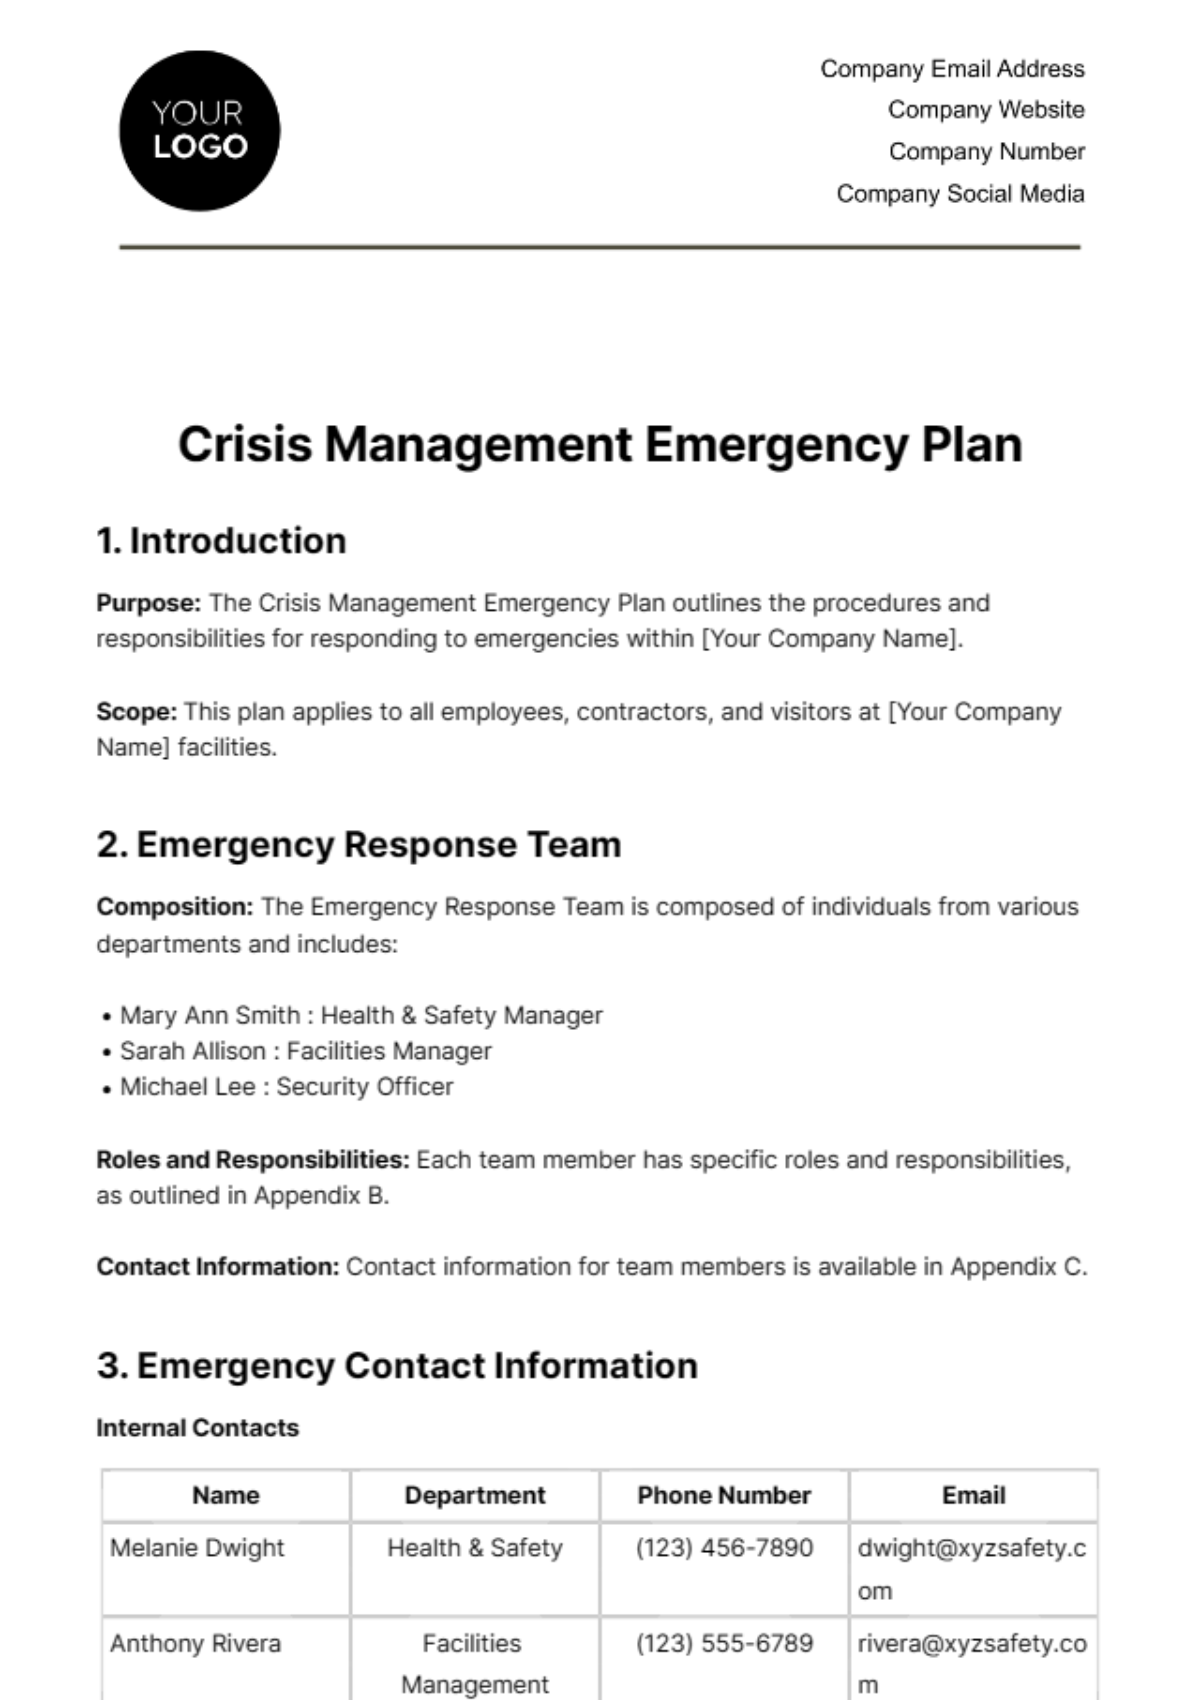 Crisis Management Emergency Plan Template